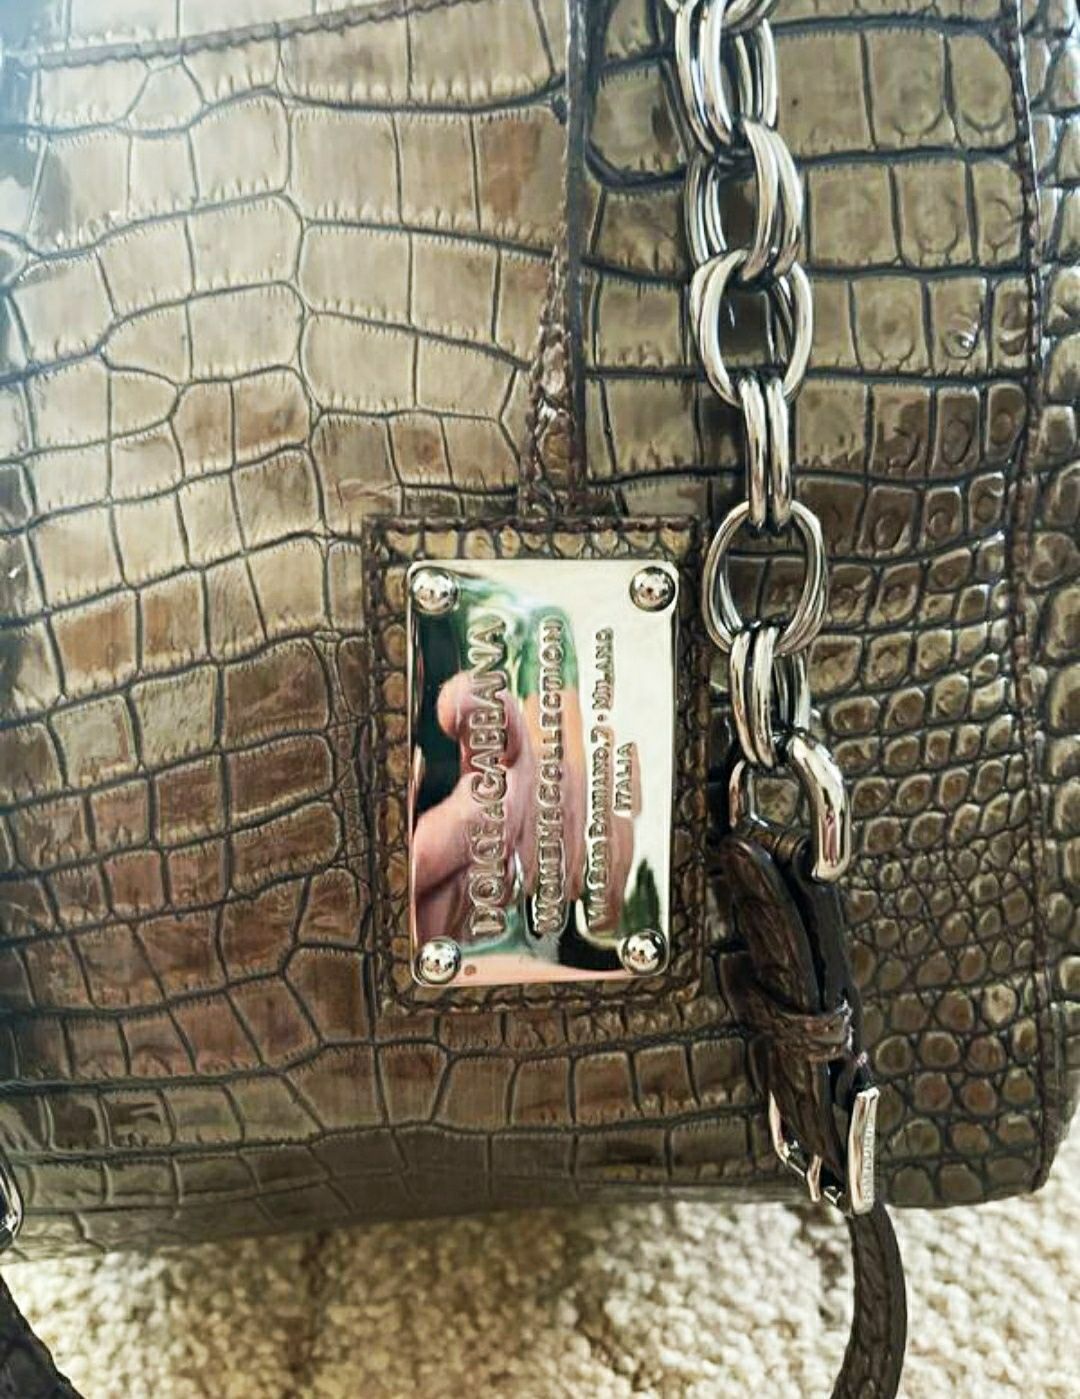 Шикарная сумка , оригинал Dolce & Gabbana